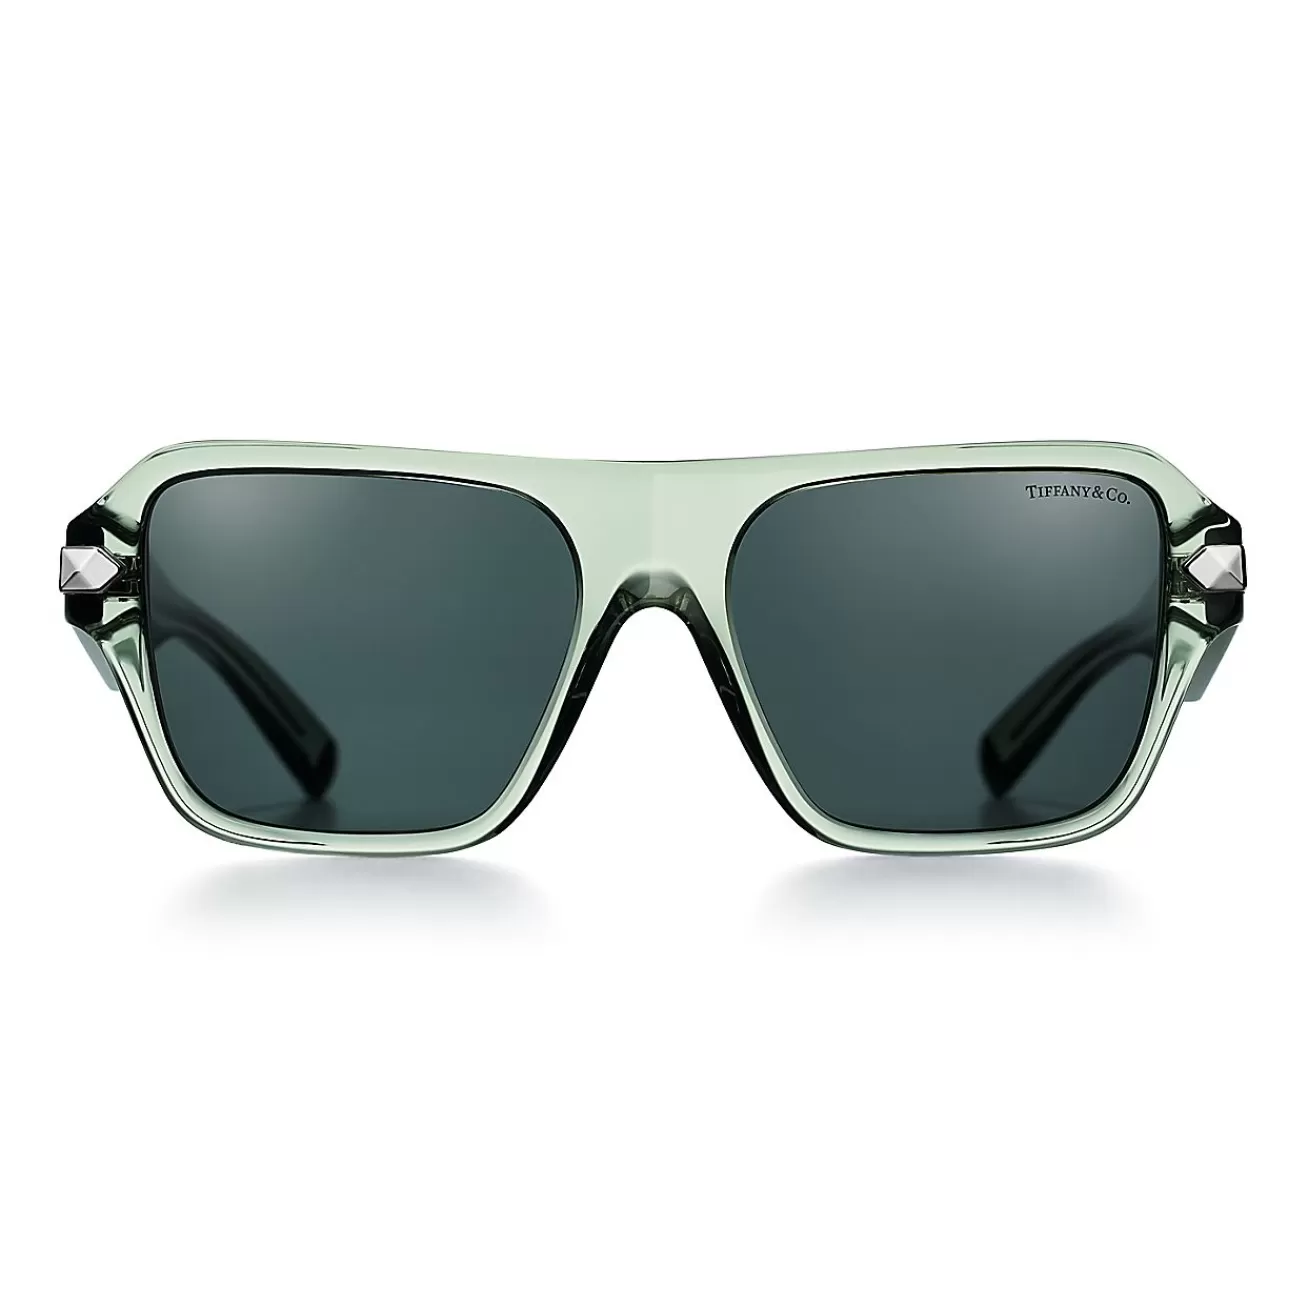 Tiffany & Co. Tiffany Sunglasses in Dark Green Acetate with Green Lenses | ^Women Sunglasses | Women's Accessories